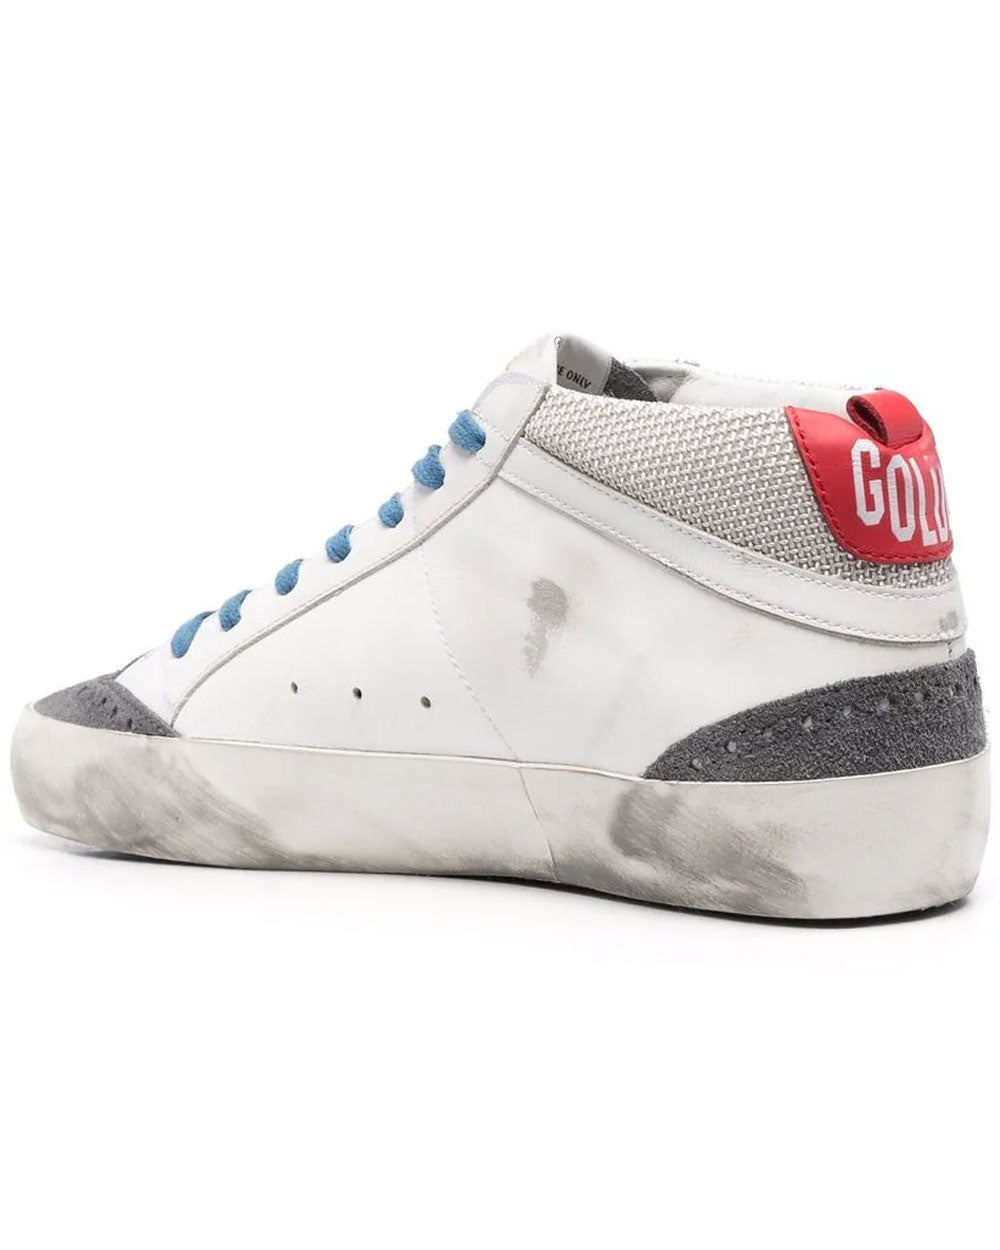 Mid Star Sneaker in White and Dark Grey